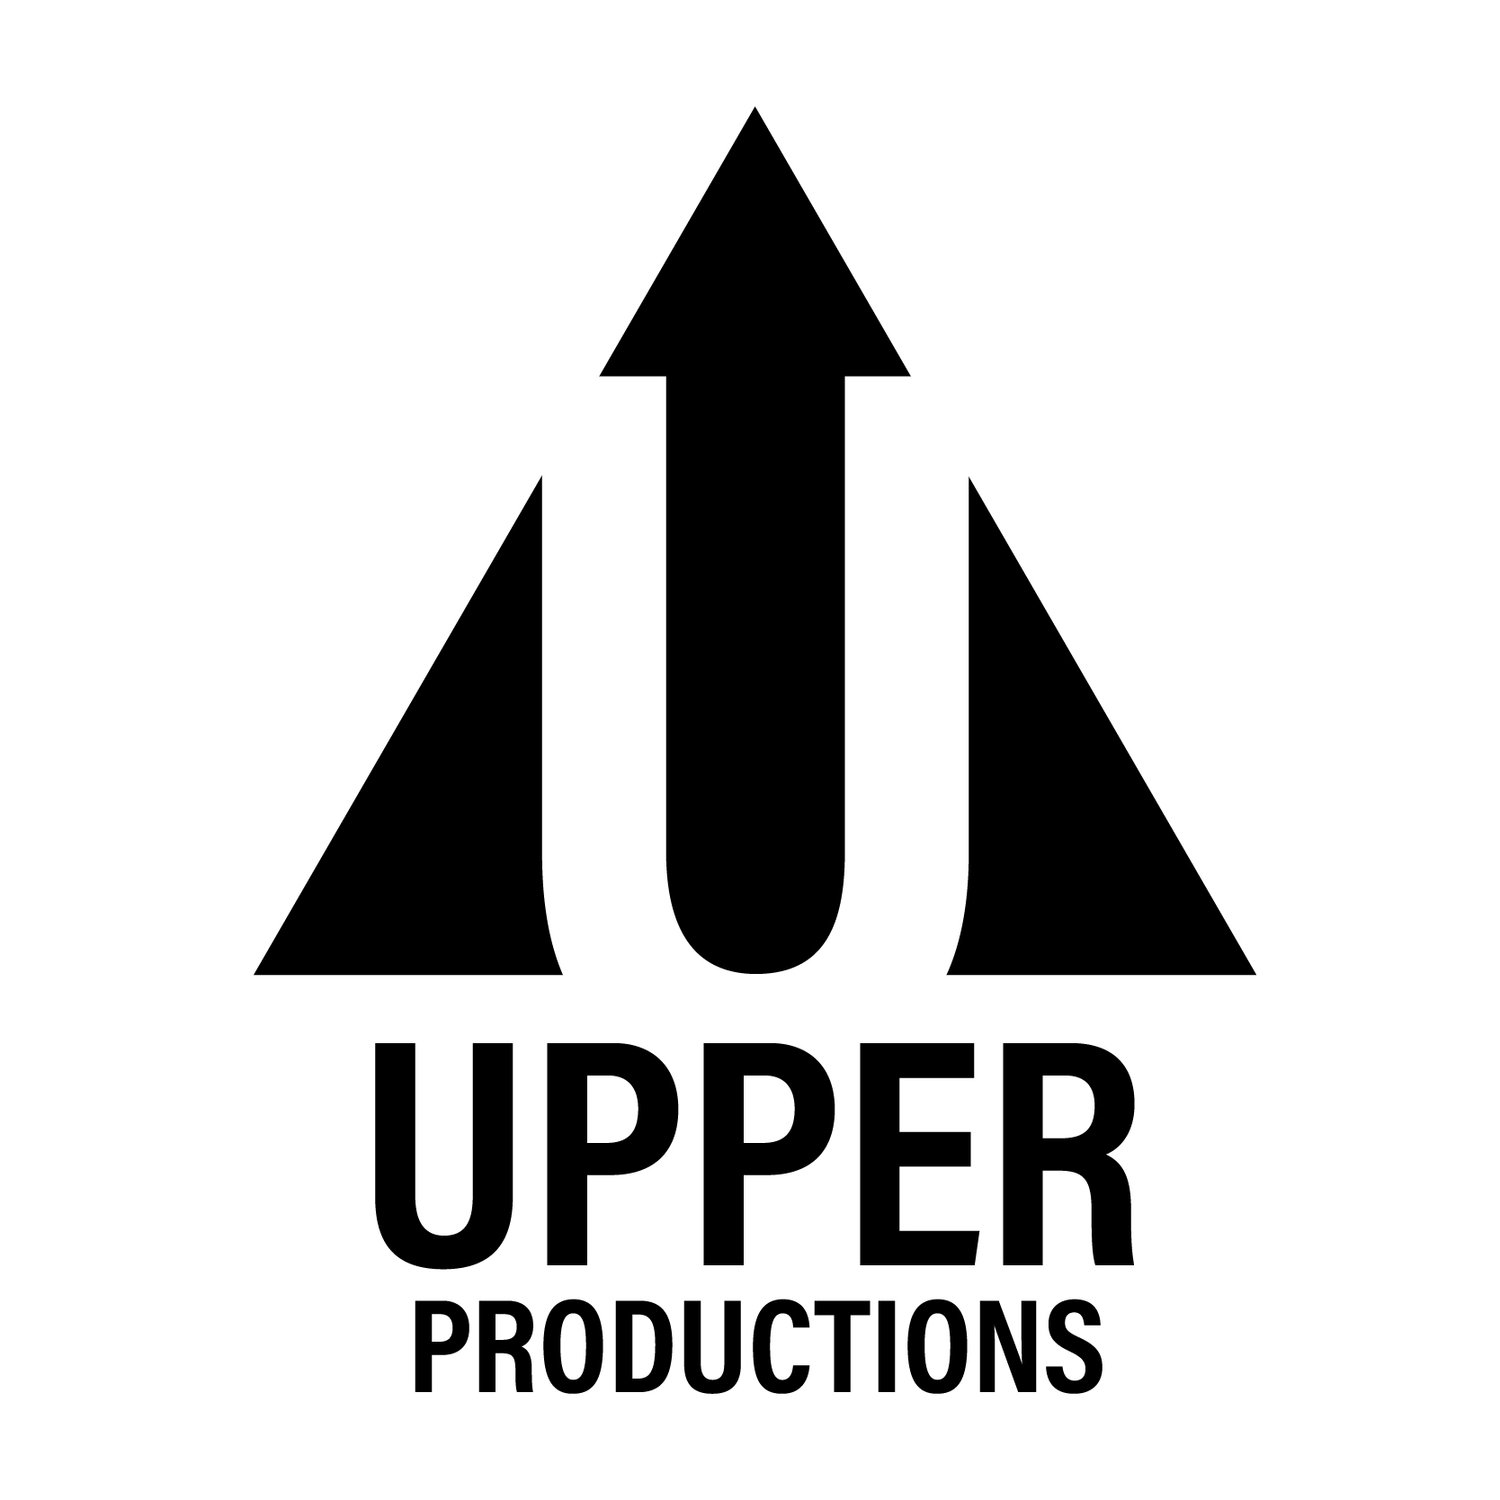 UPPER PRODUCTIONS